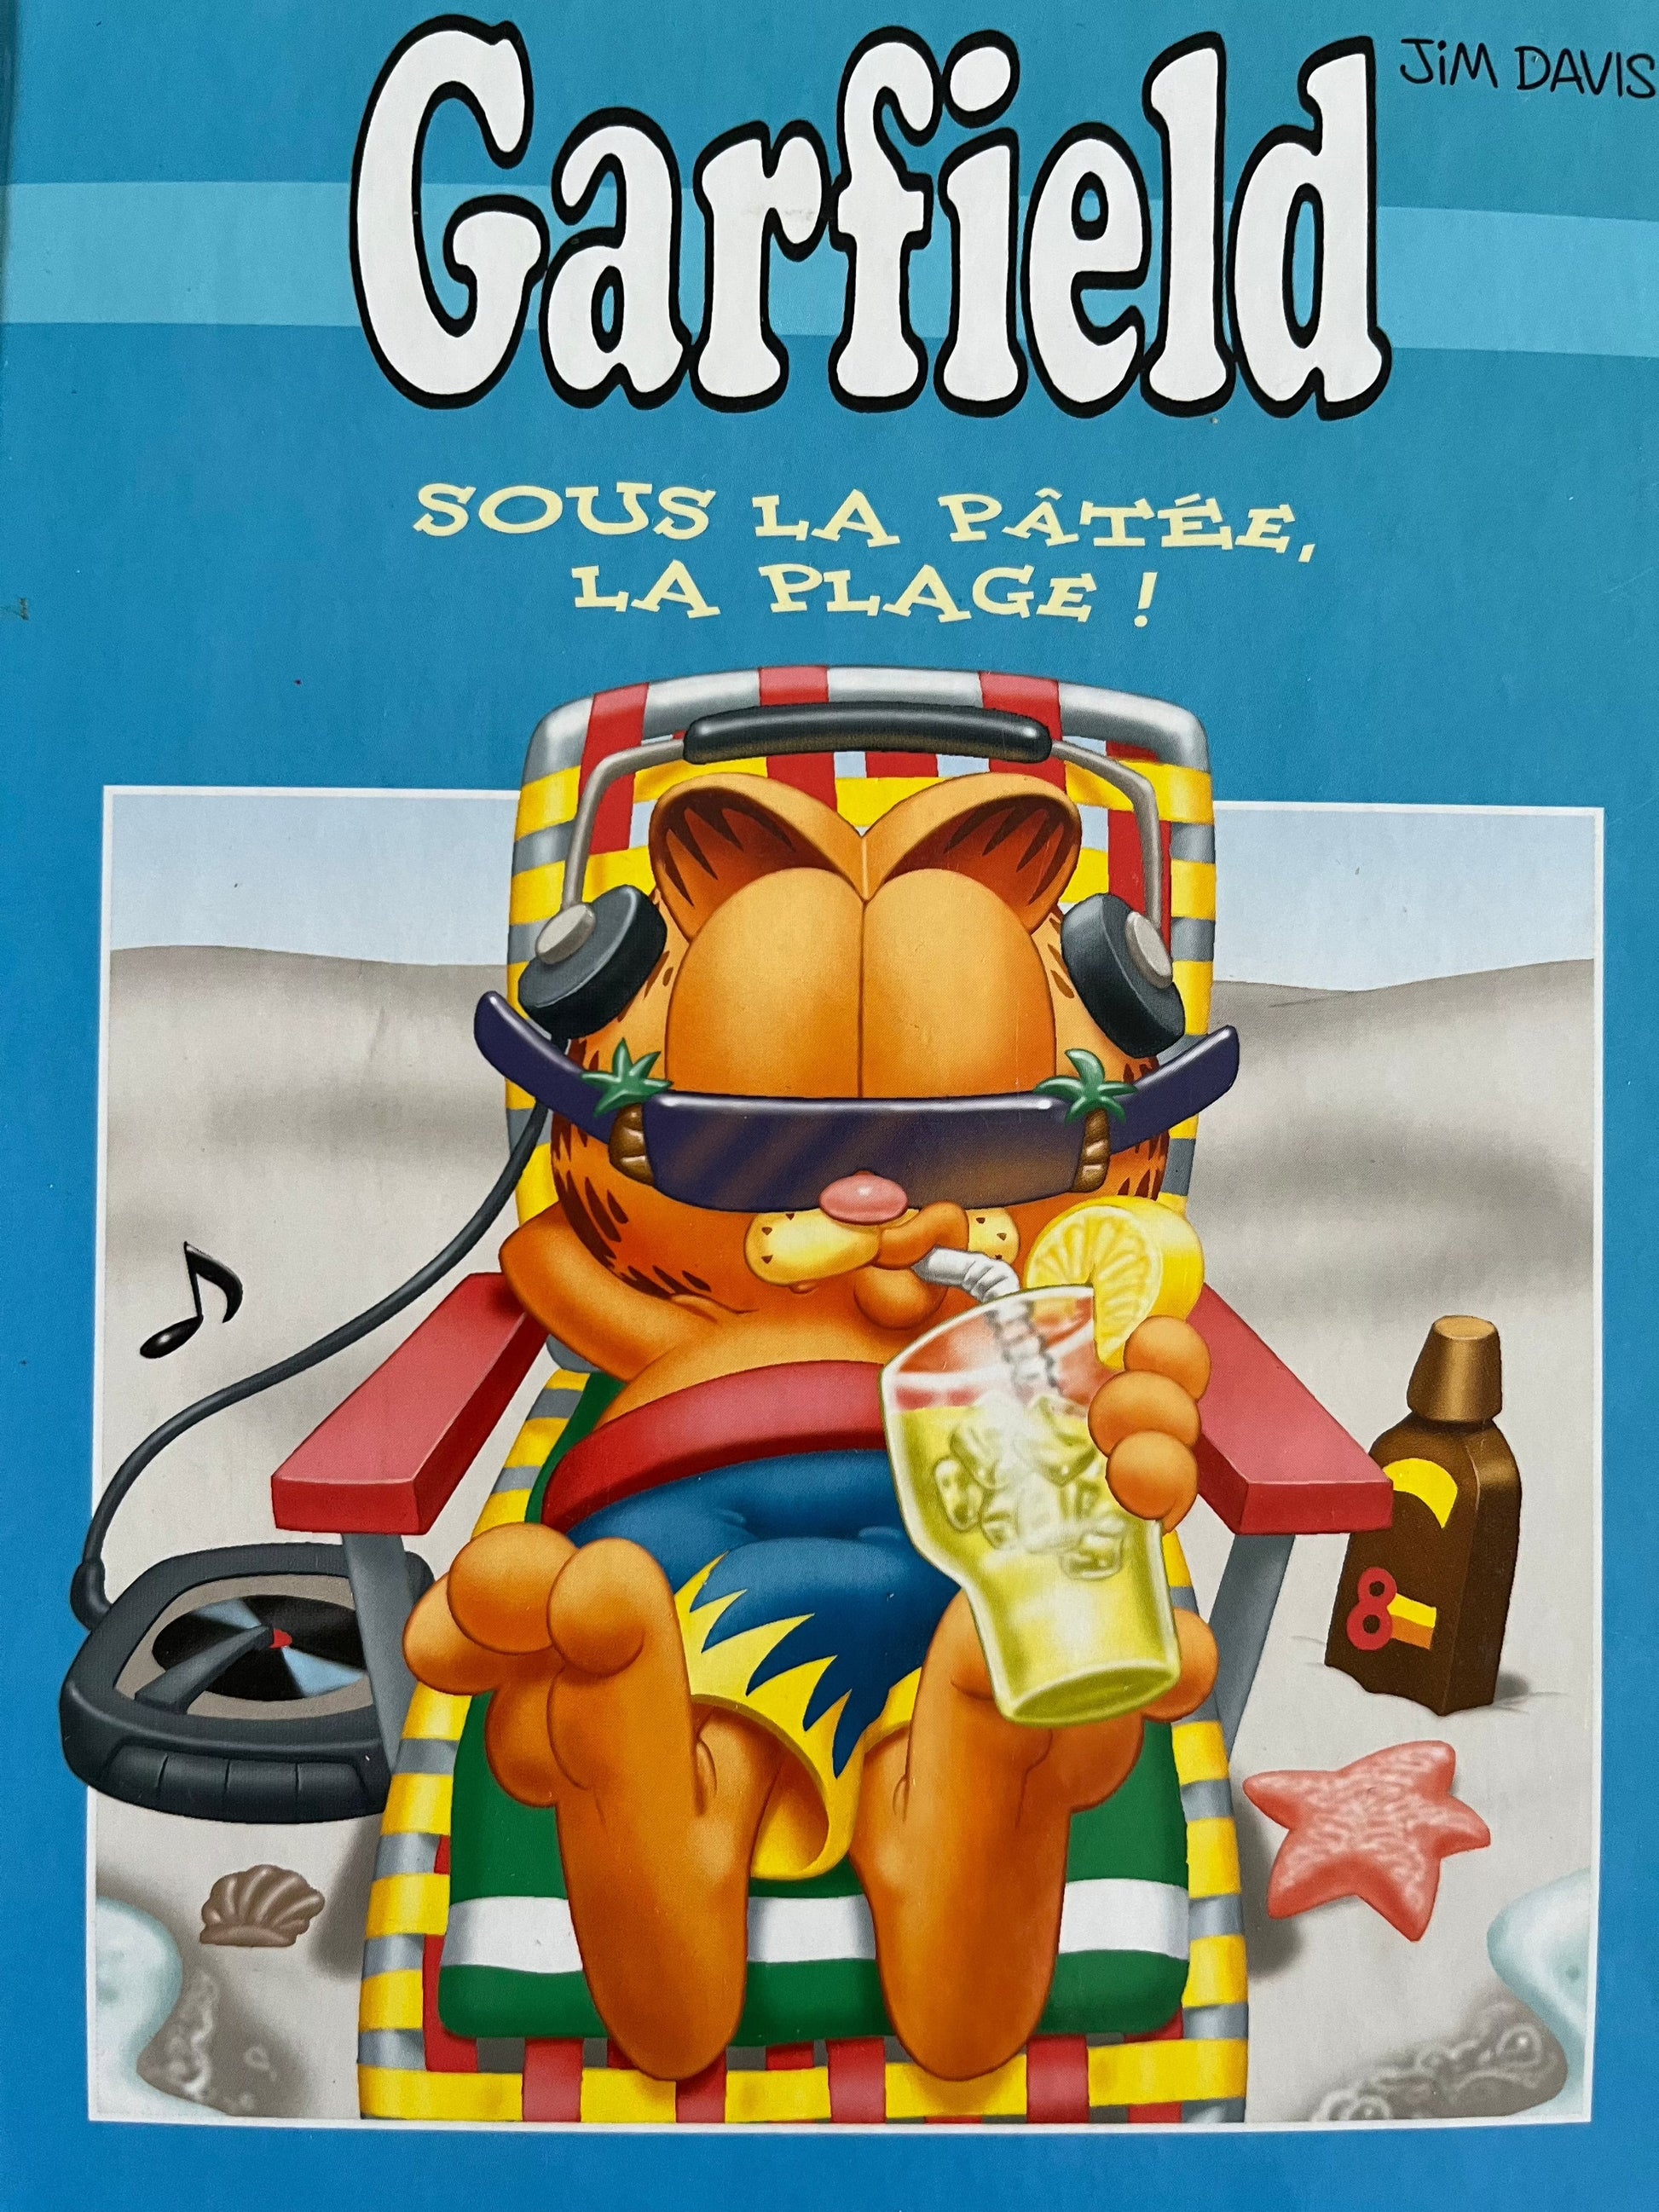 2 Garfield comics (8345401458905)